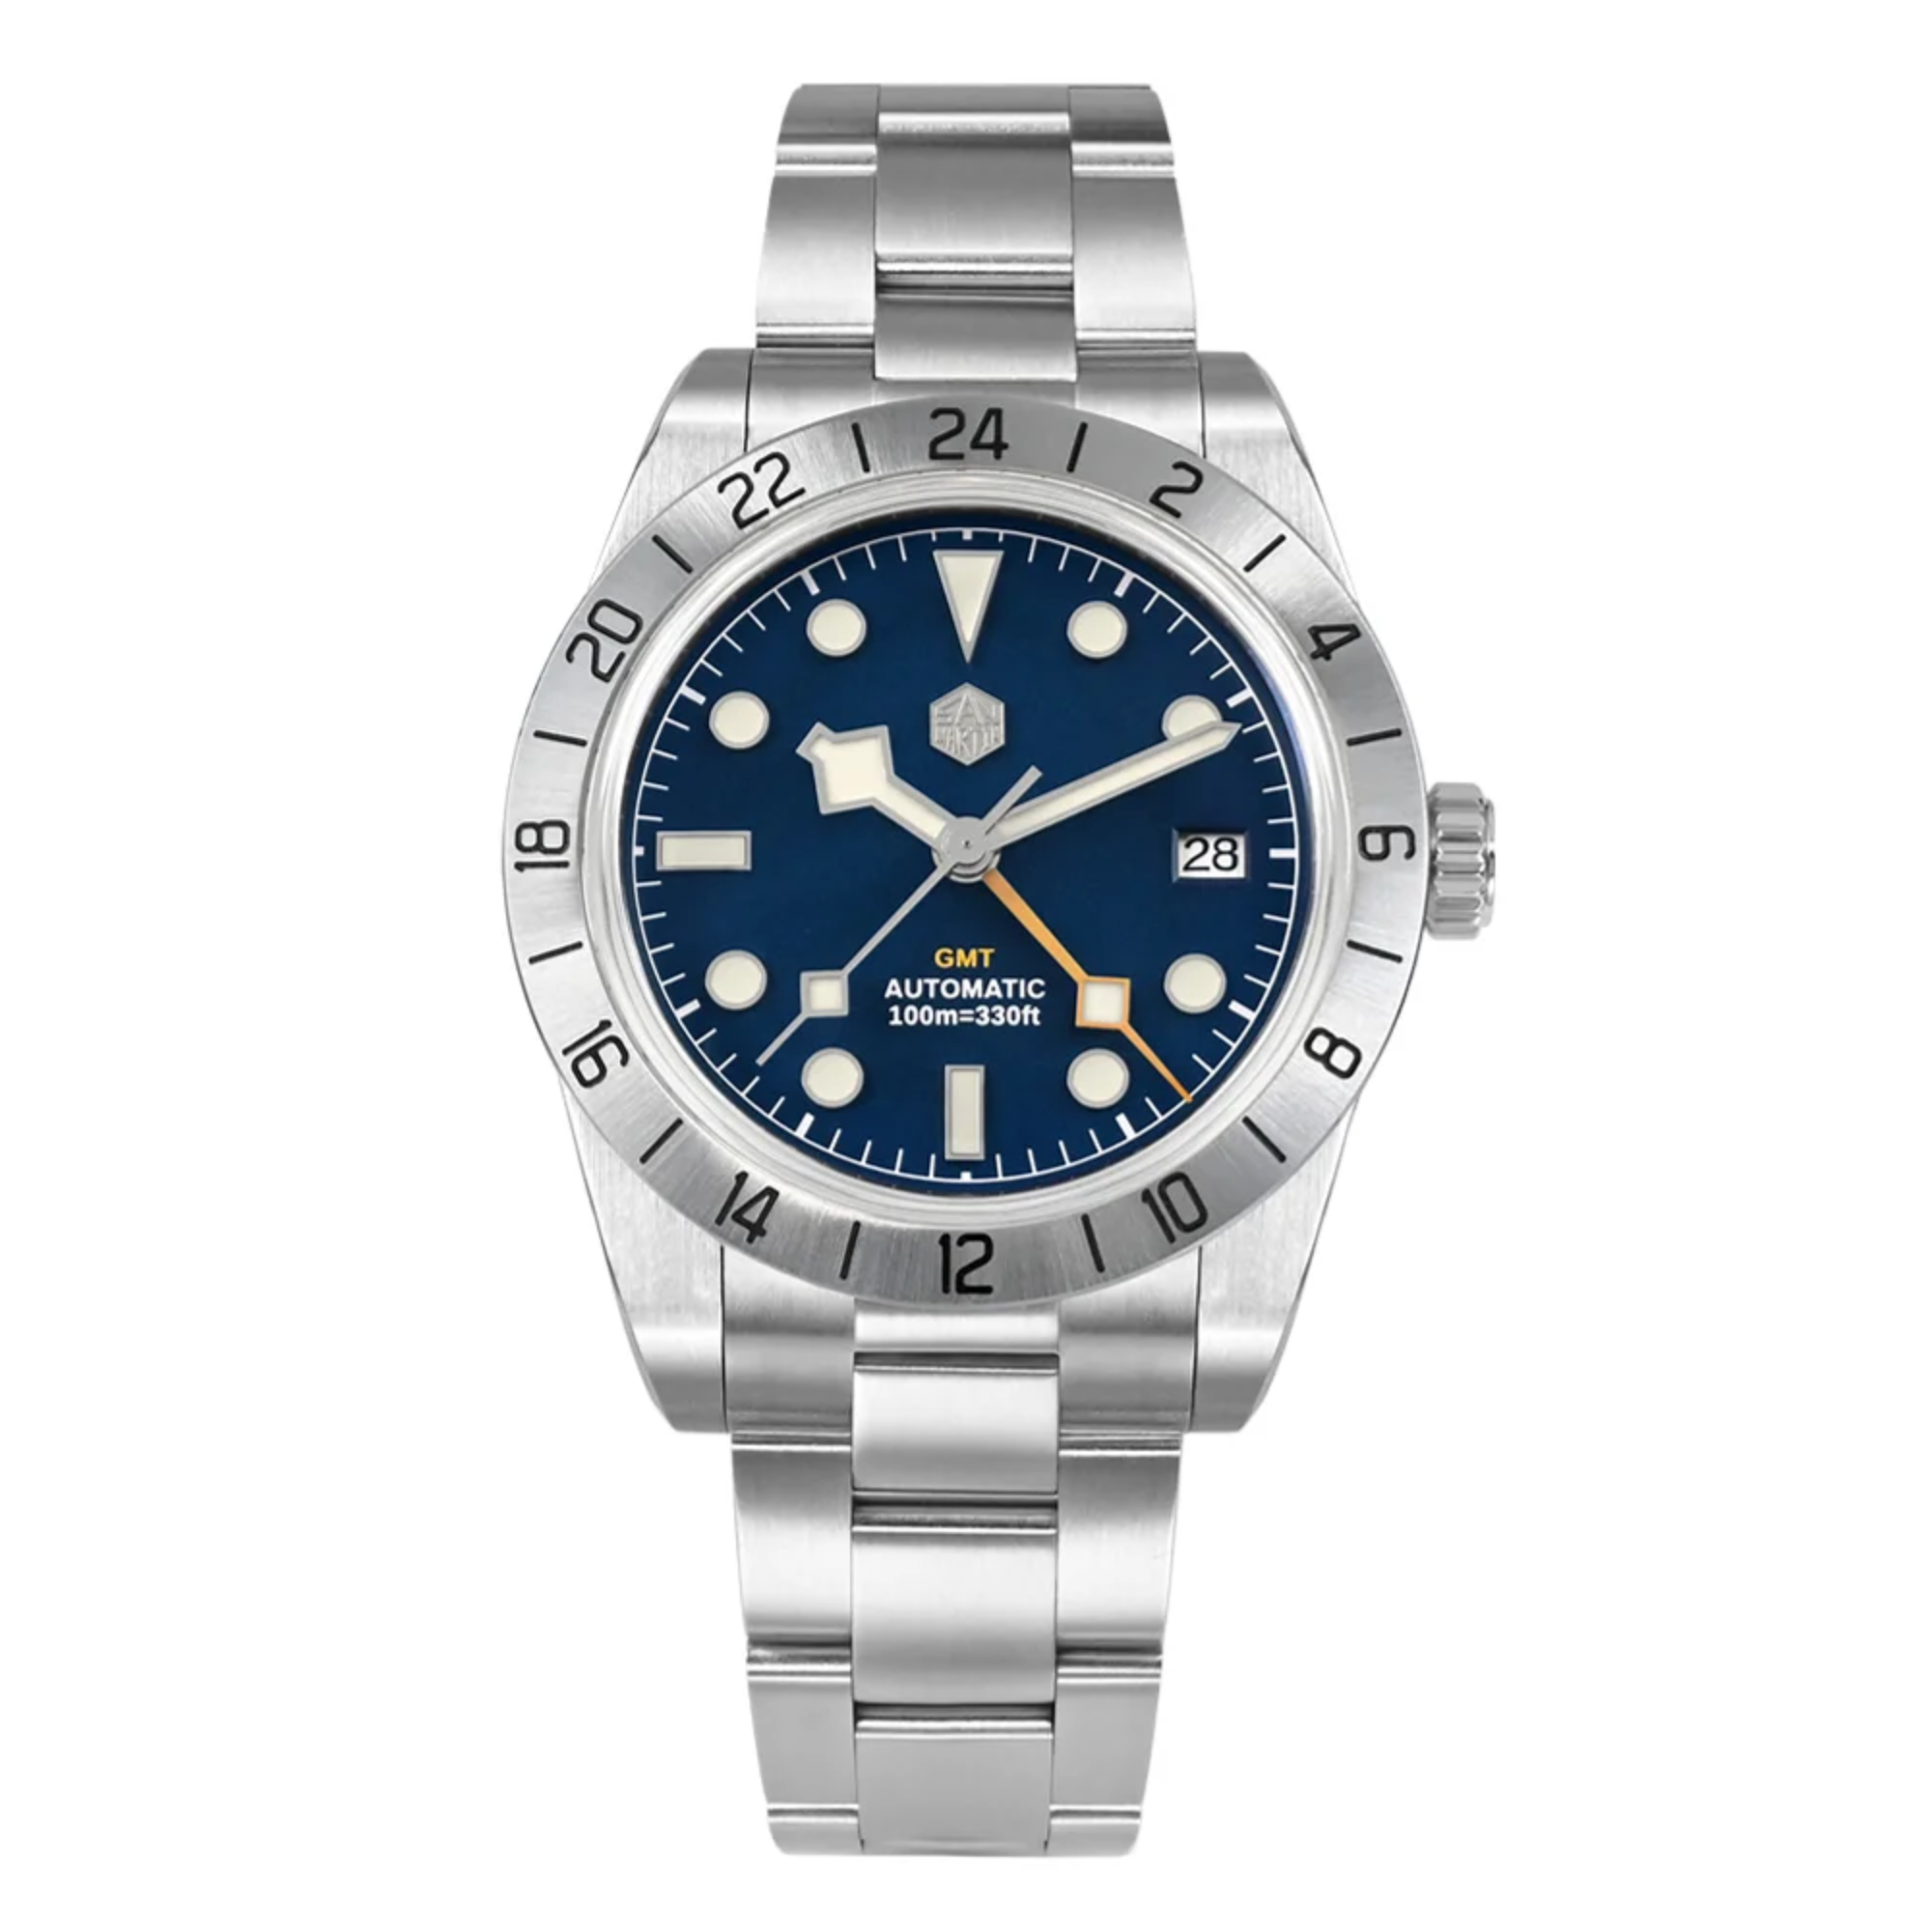 San Martin NH34 39mm BB GMT Watch SN054C - Blue san martin watches india online